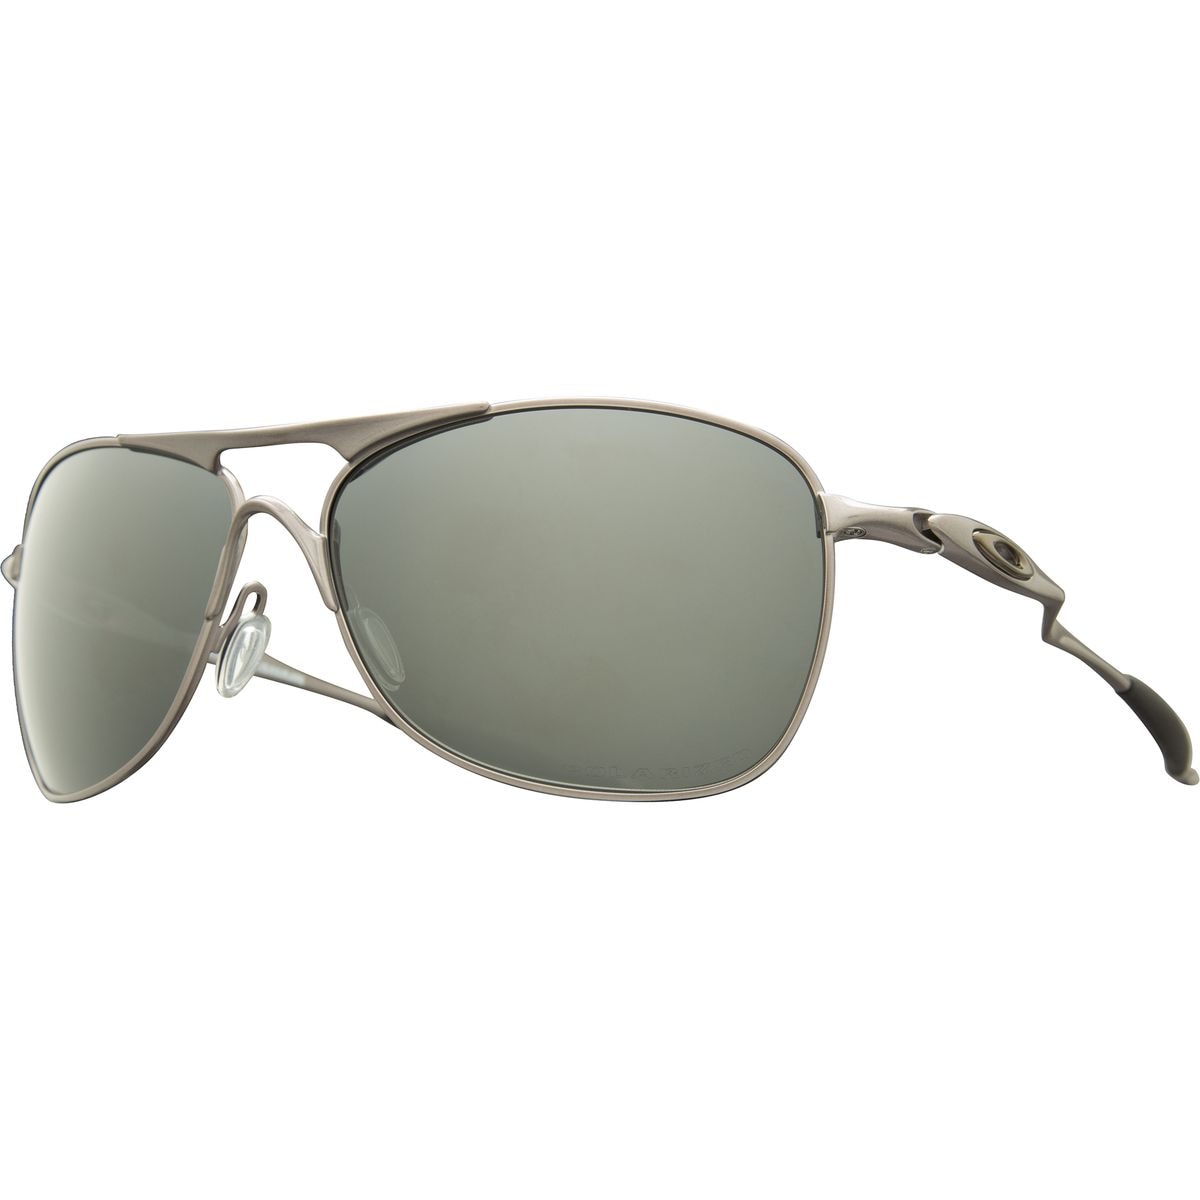 Oakley Crosshair Sunglasses Polarized Men's